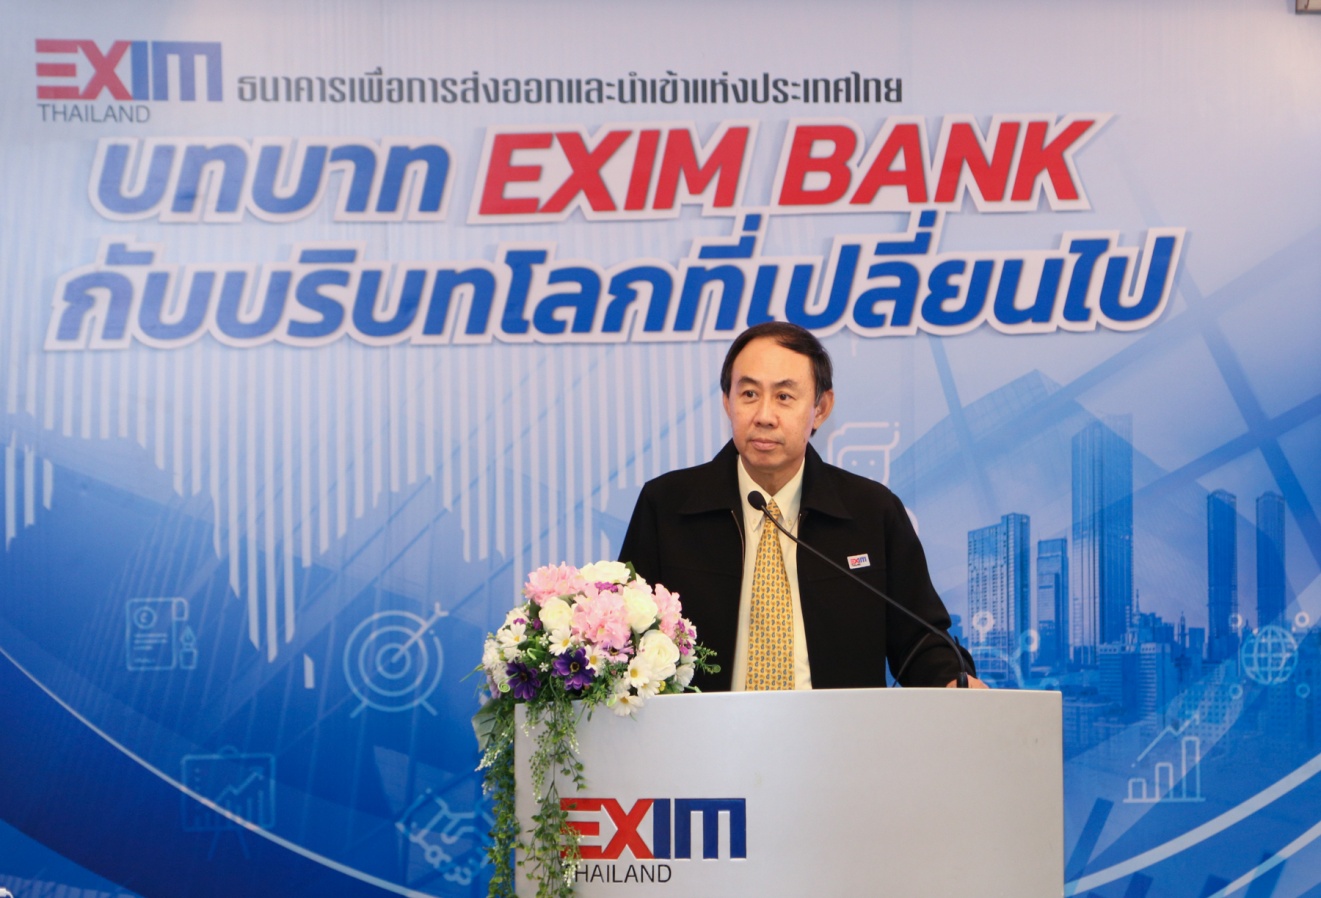 EXIM BANK สนับสนุนผู้ประกอบการไทยปรับตัวรุกลงทุนในตลาดใหม่และพัฒนานวัตกรรมสินค้าส่งออกในภาวะการส่งออกไทยมีแนวโน้มโตต่อเนื่องท่ามกลางปัจจัยเสี่ยงในปี 2561